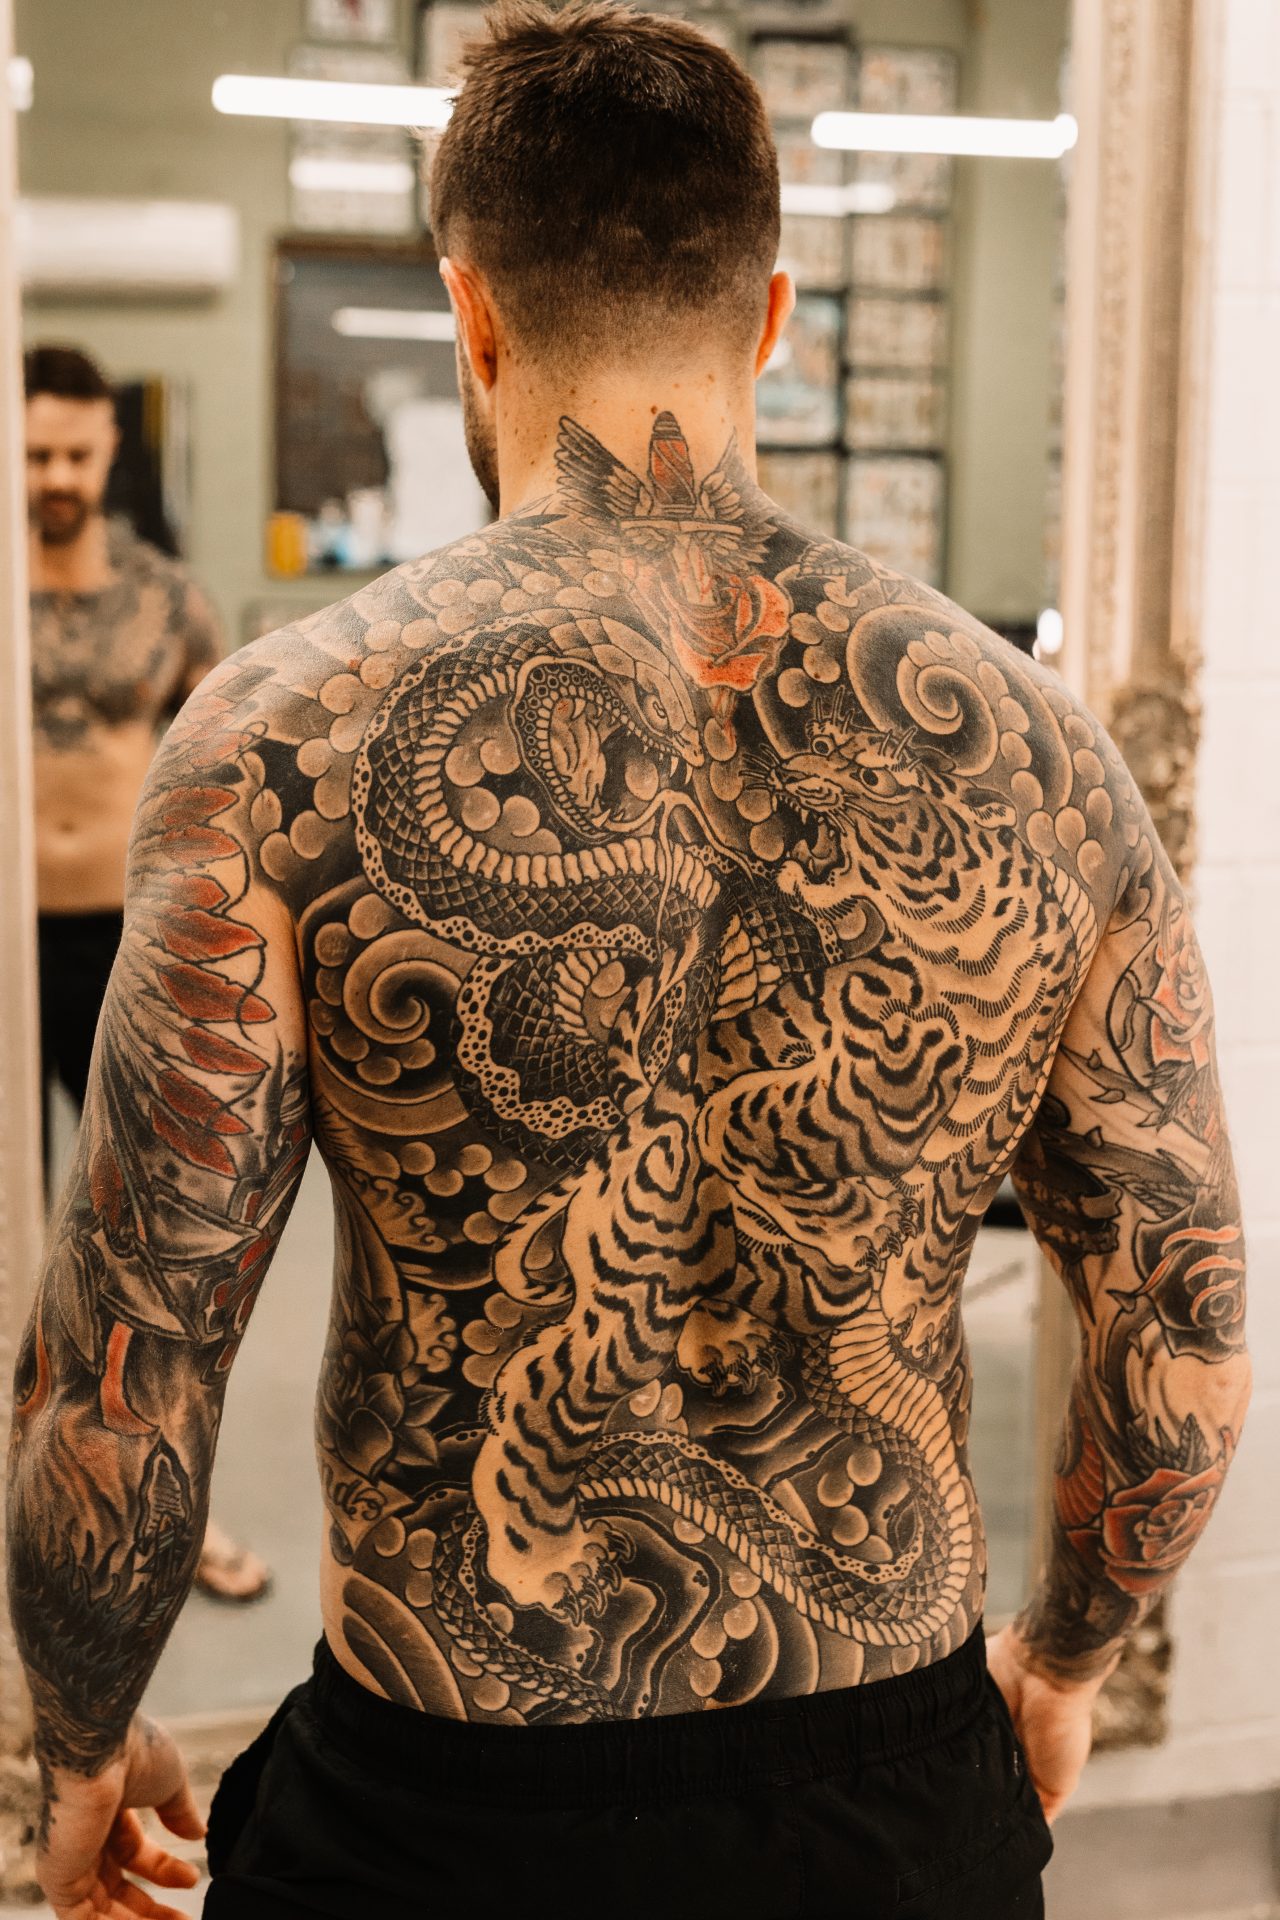 Blackout Tattoo OR Blastover? | UN1TY Tattoo Studio | Shrewsbury